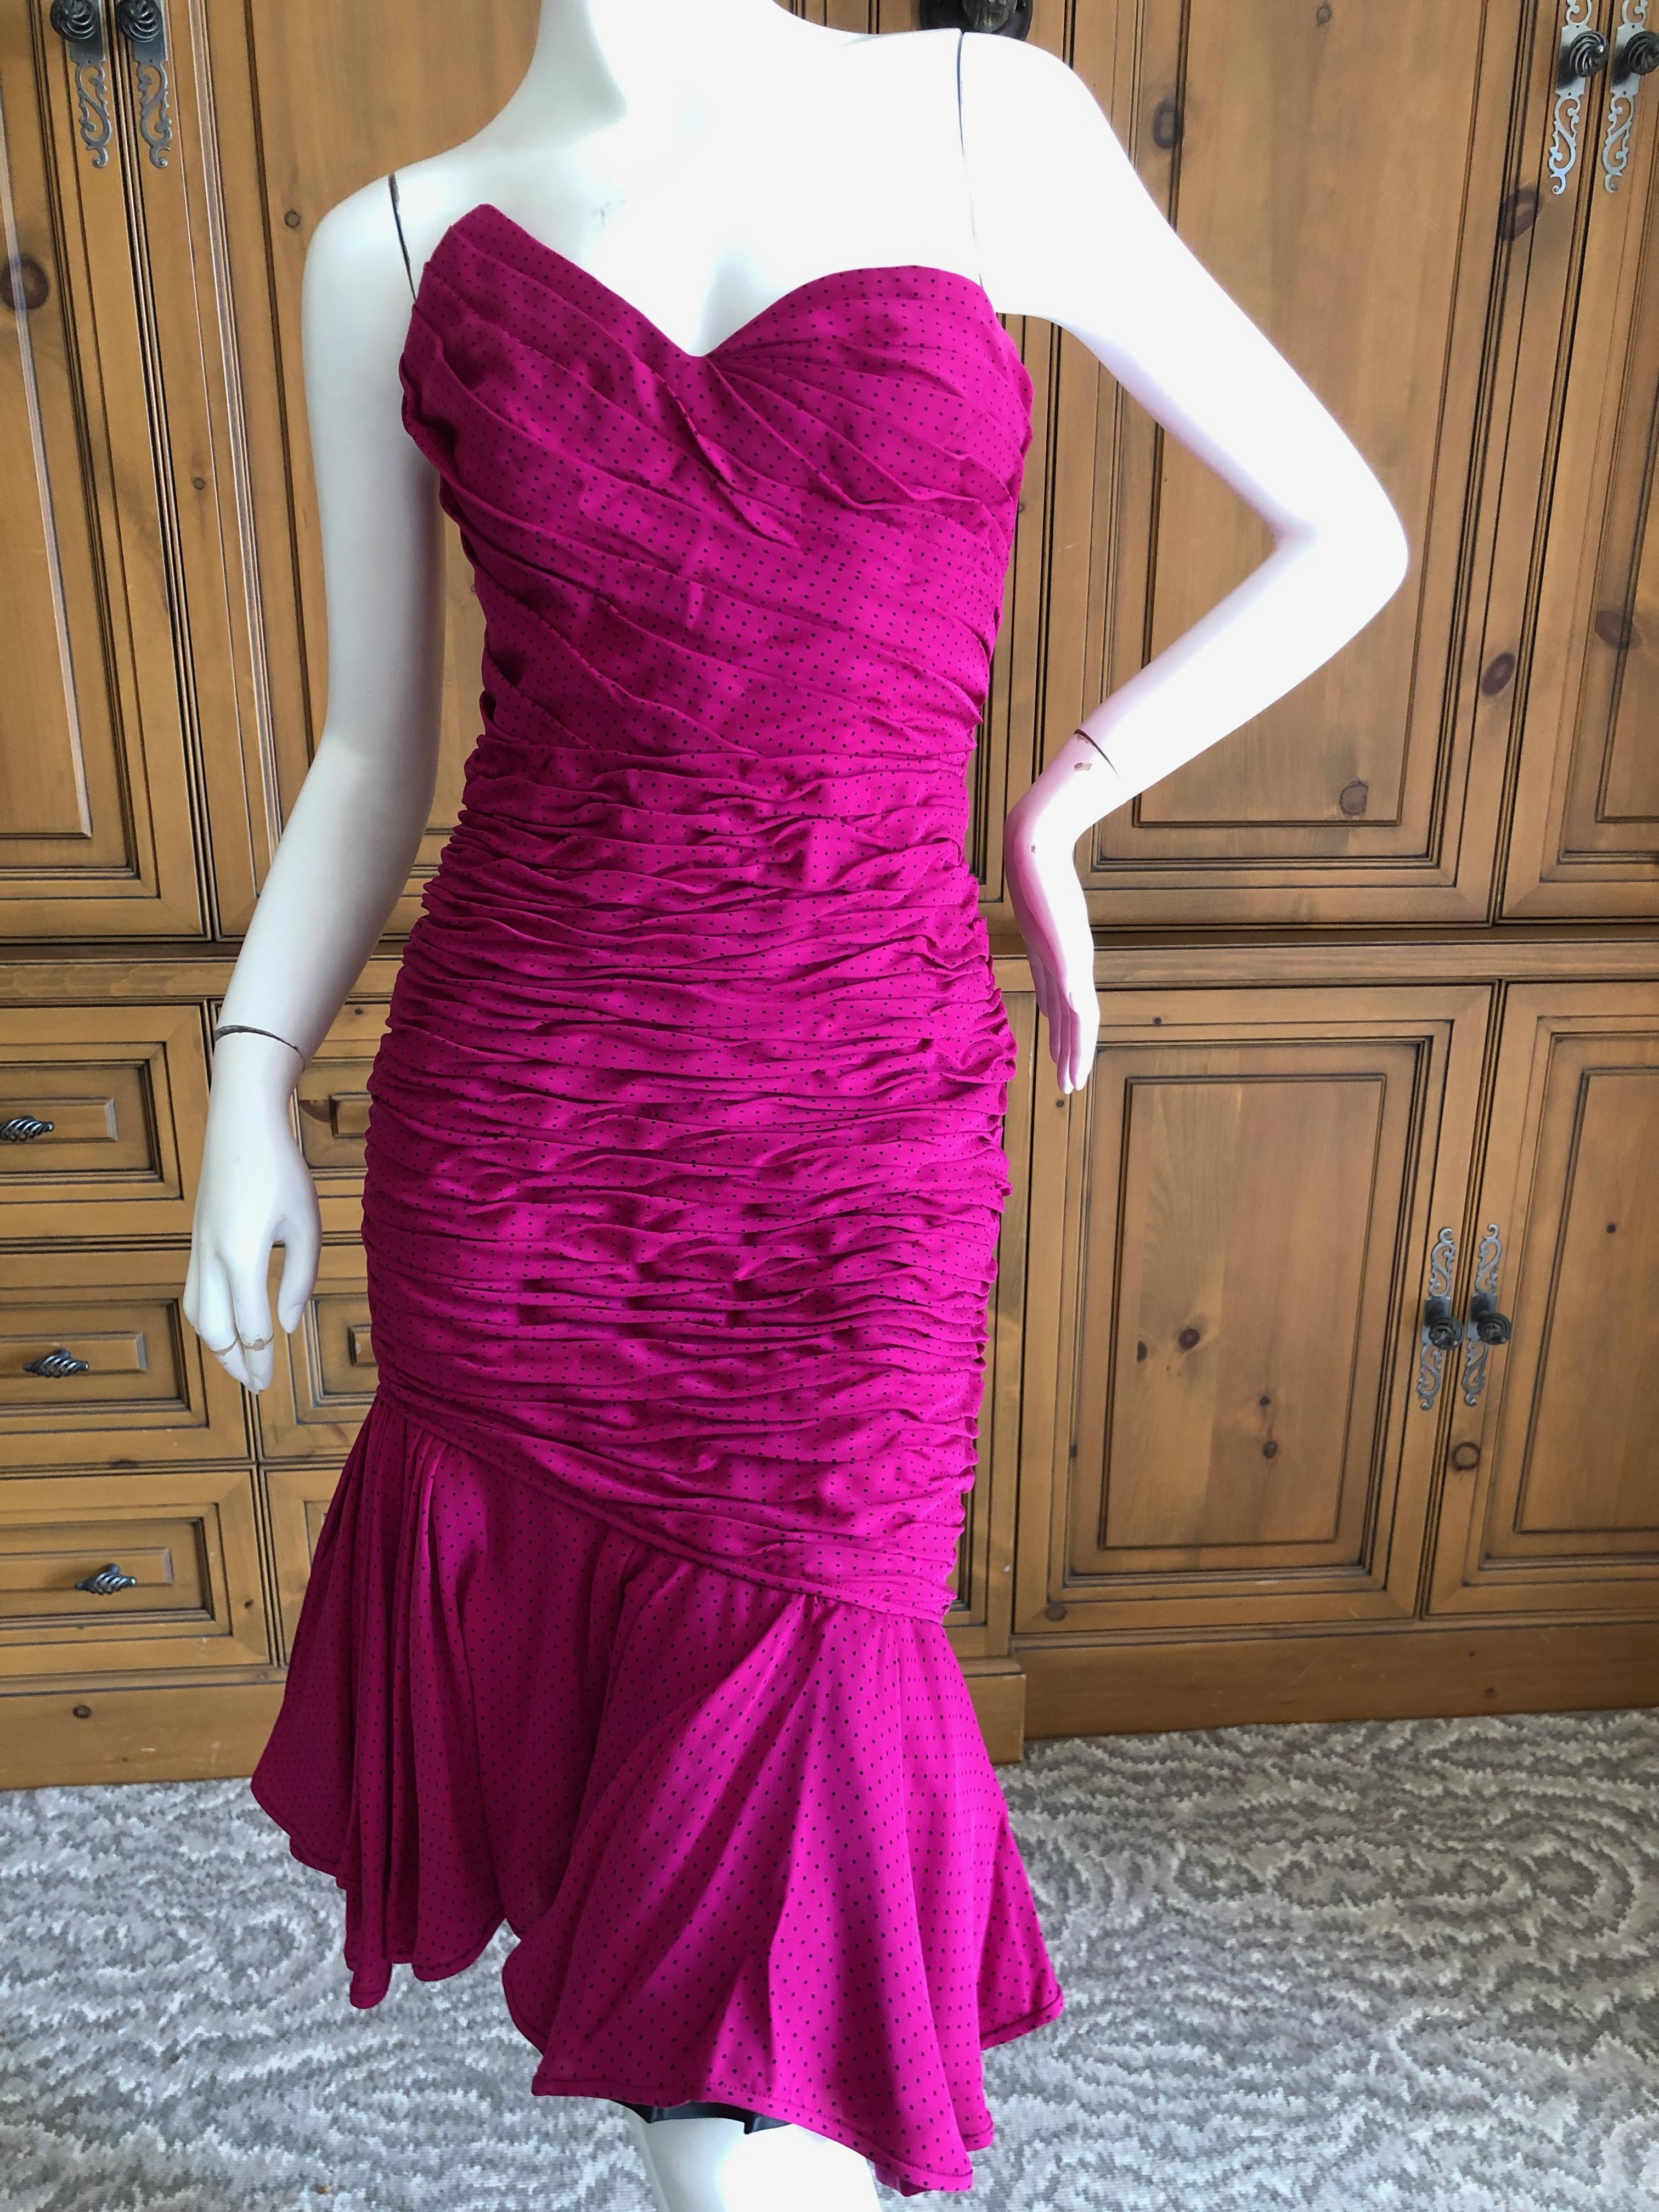 Emanuel Ungaro Parallel Fall 1984 Shirred Silk Strapless Evening Dress with Hidden Lace Hem.
So pretty .
Interior boning.

Bust 34